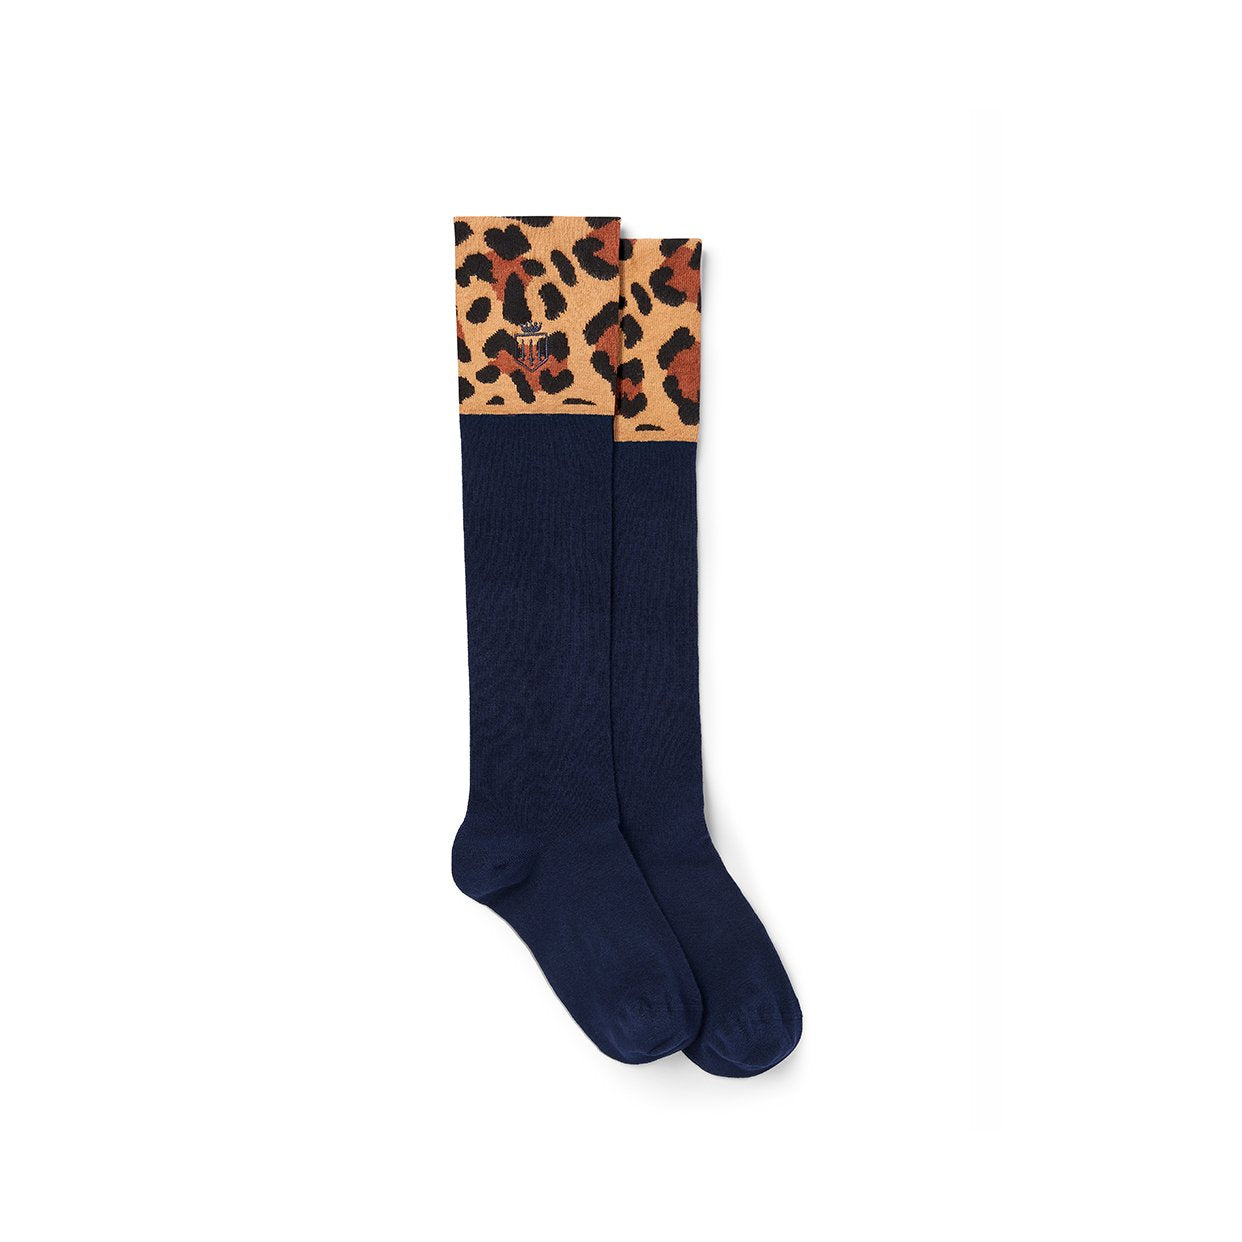 Signature Knee High Socks - Navy/Leopard